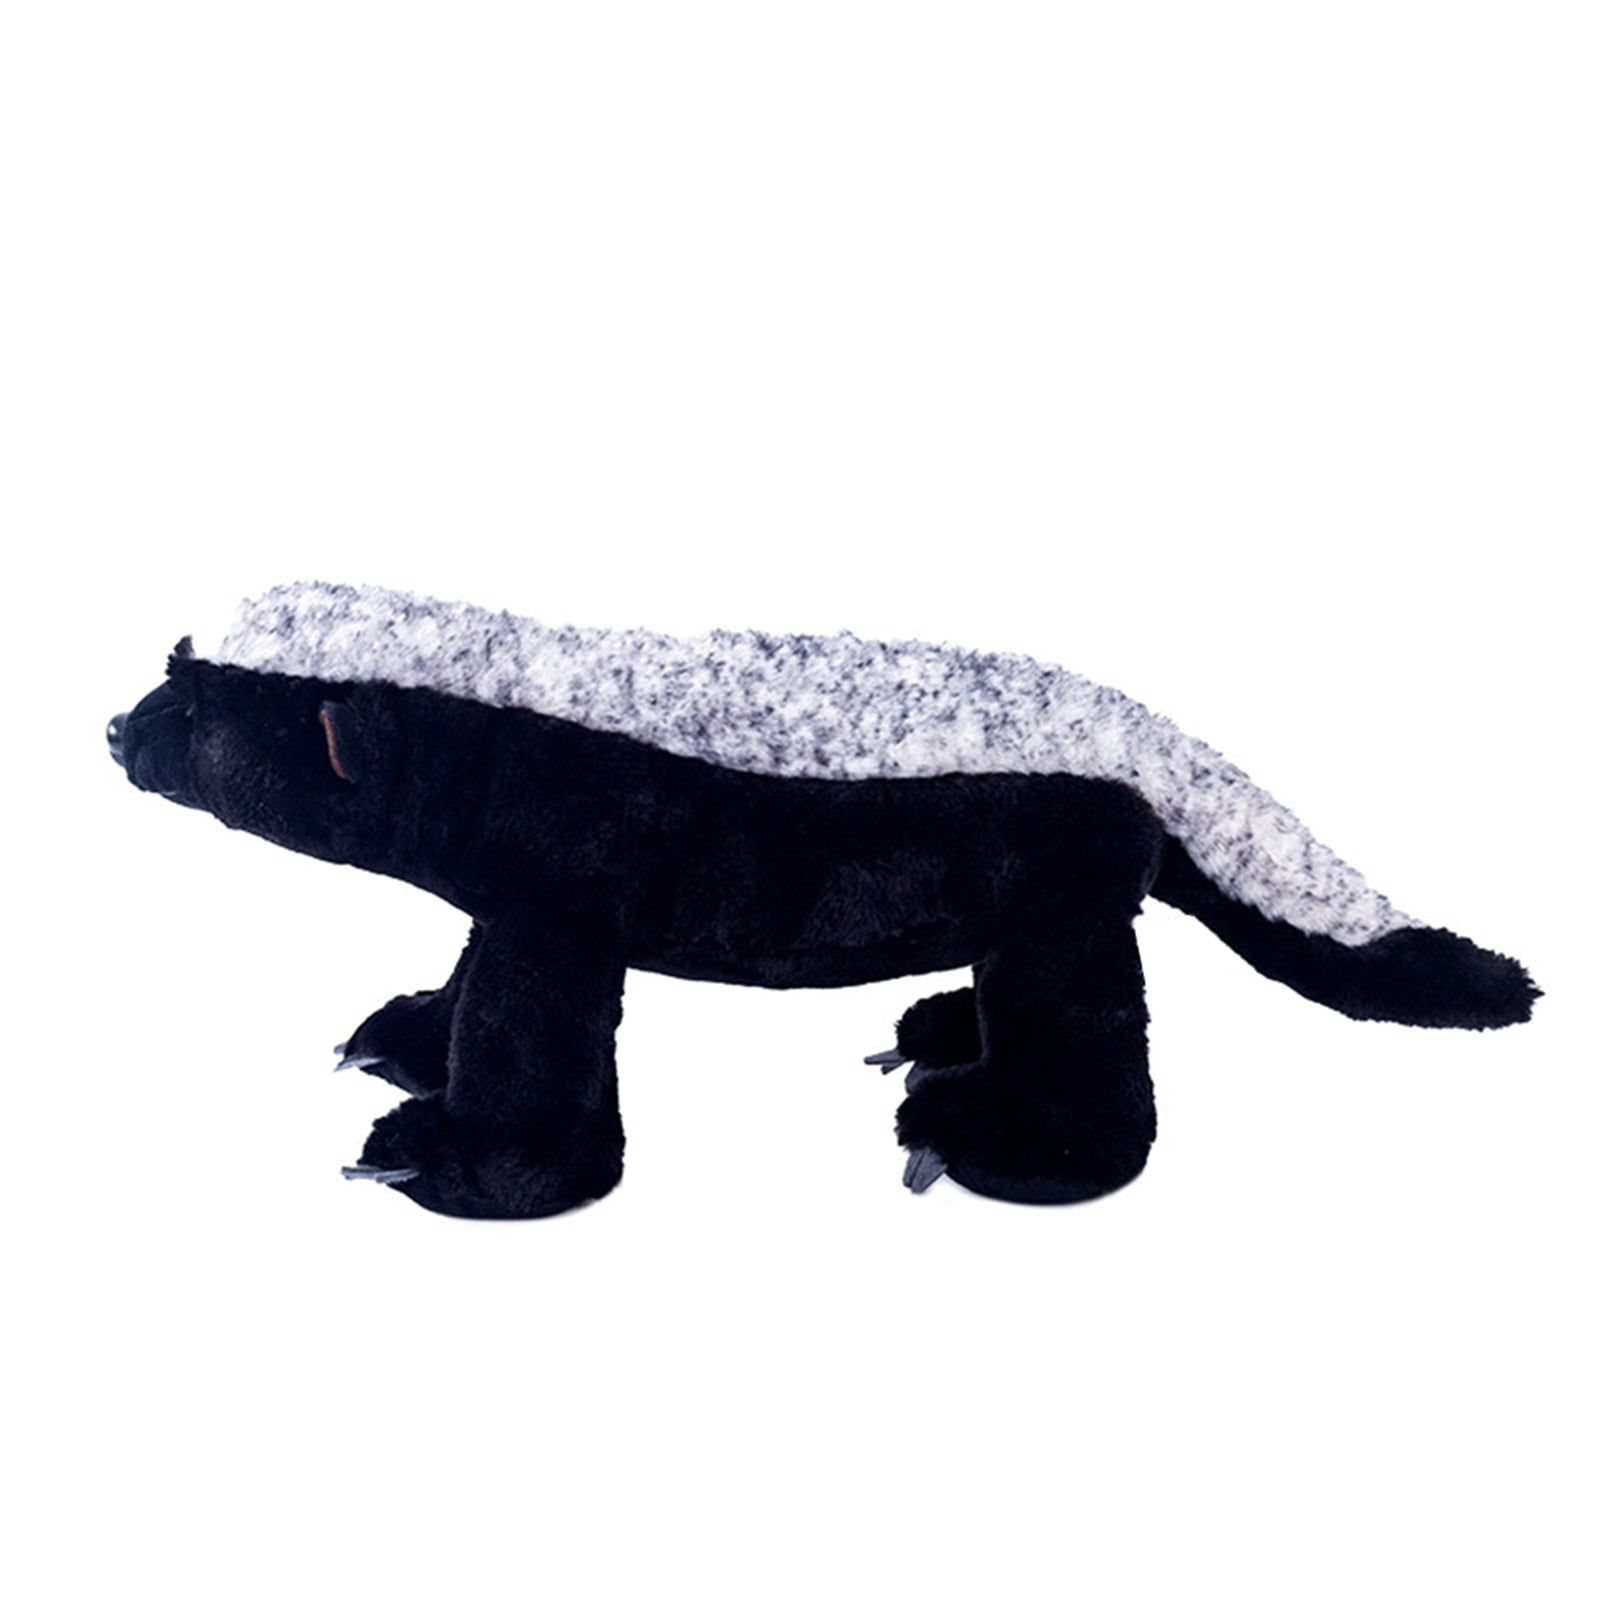 Douglas Barry Badger Plush Stuffed Animal 11" Long for sale online 